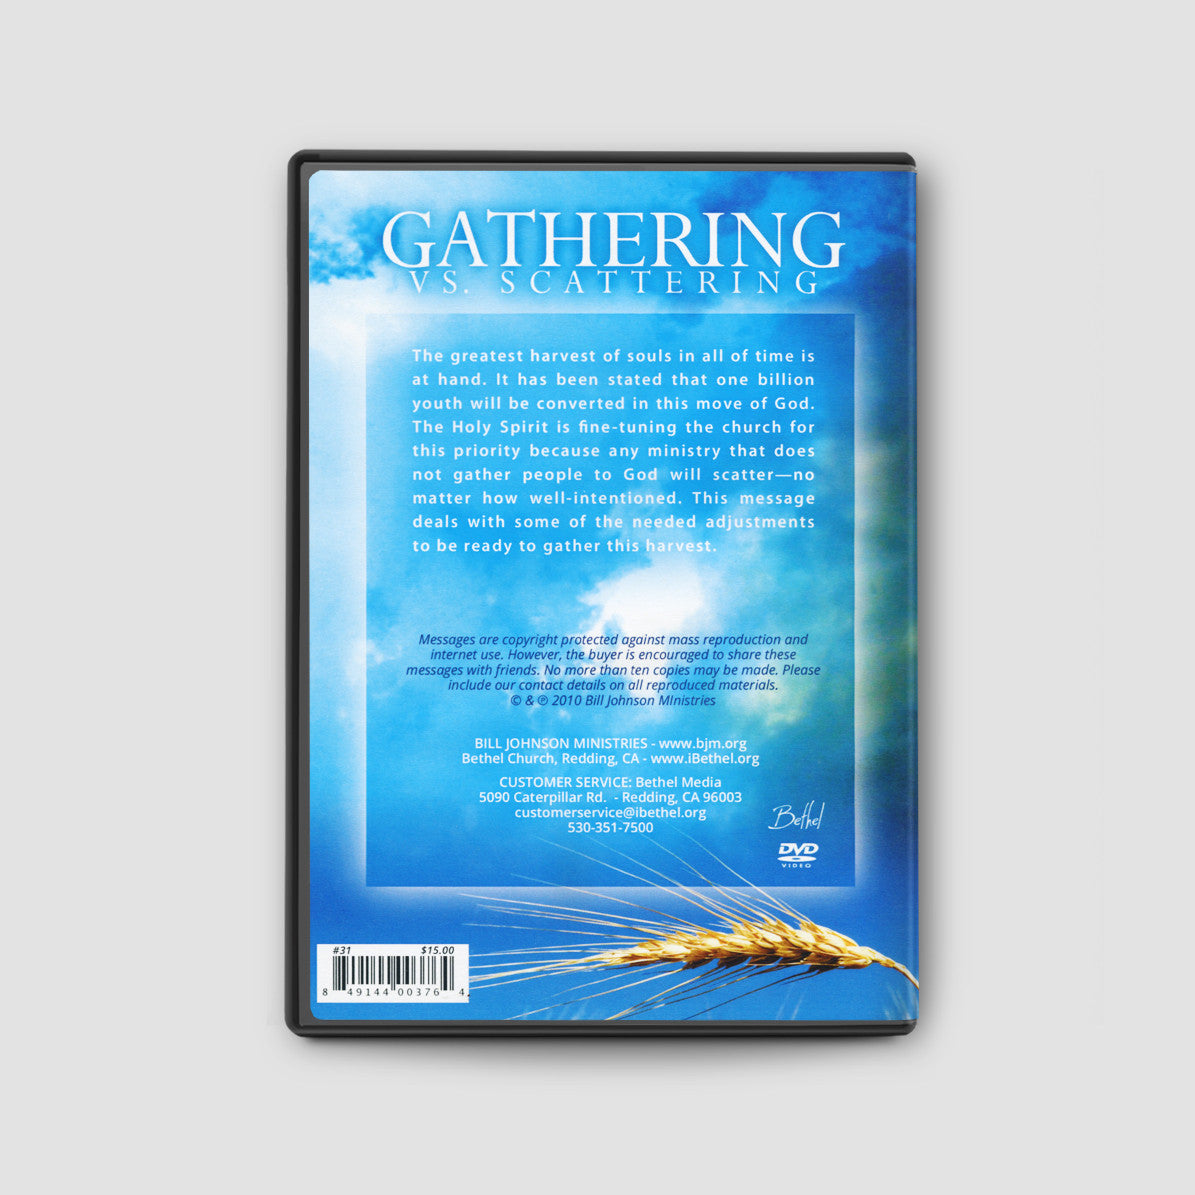 Gathering vs. Scattering